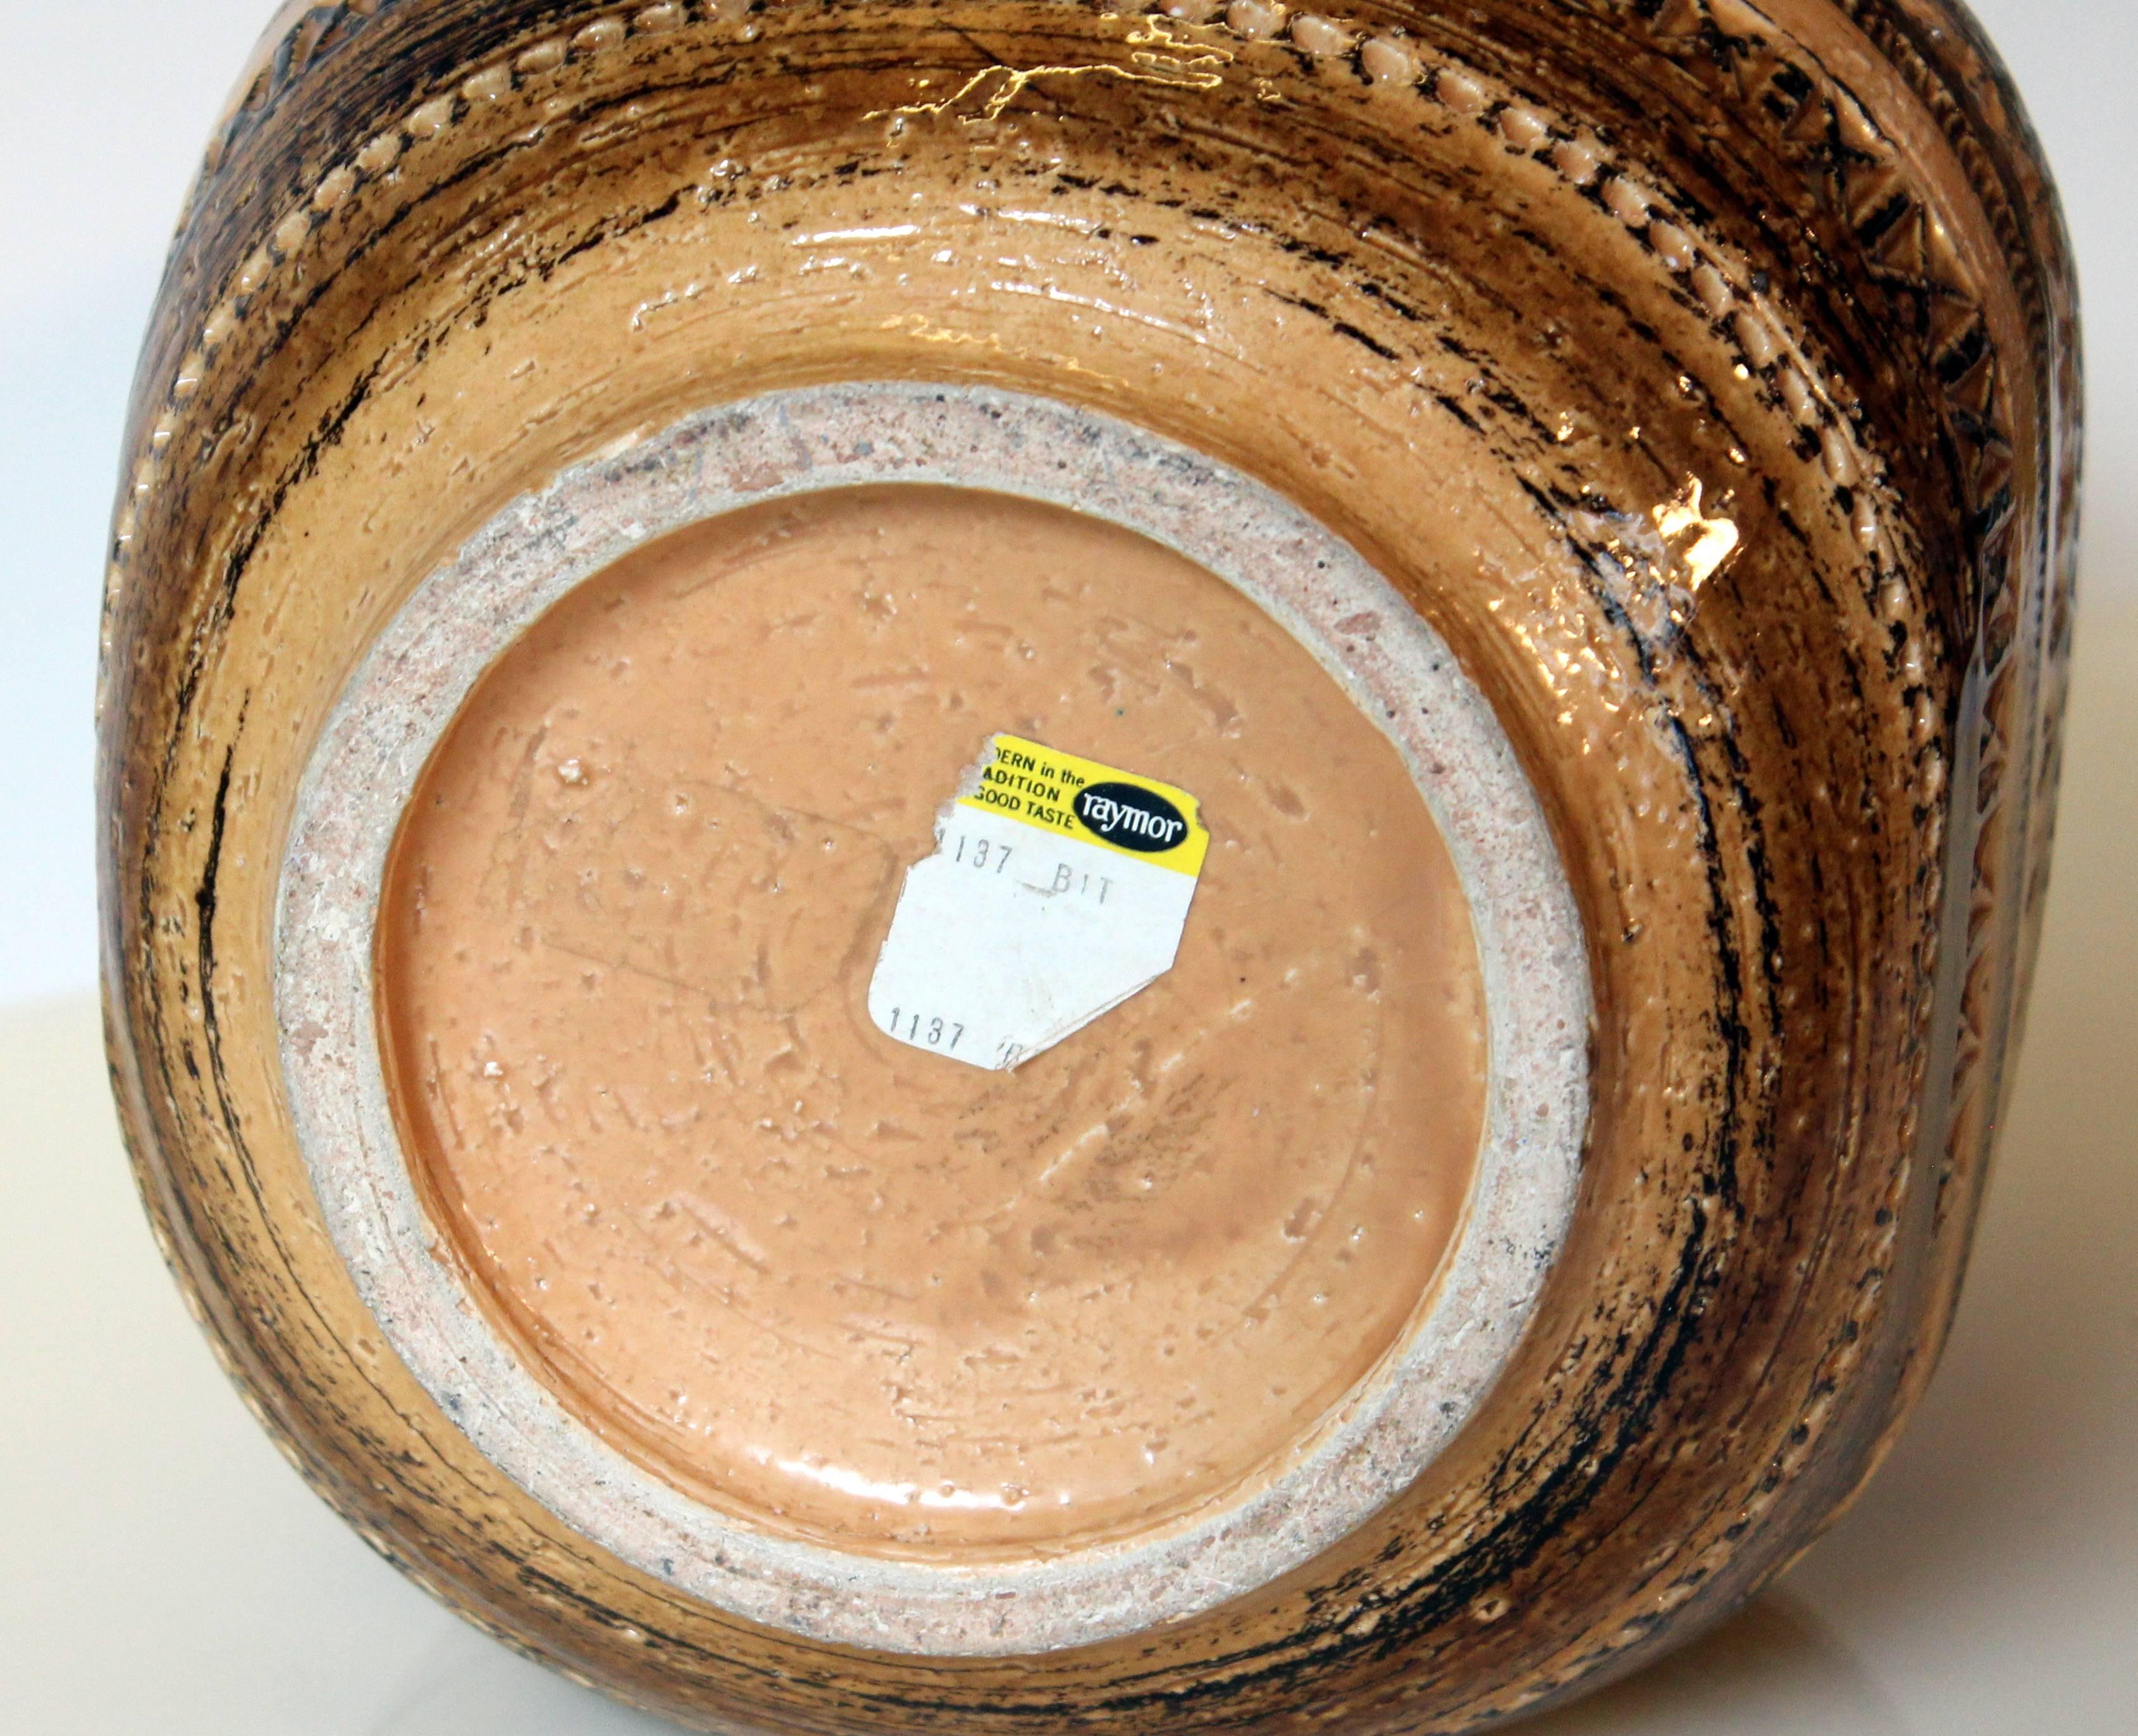 Bitossi for Raymor Large Rimini Sahara Decor Vase Original Label Italian Pottery 1